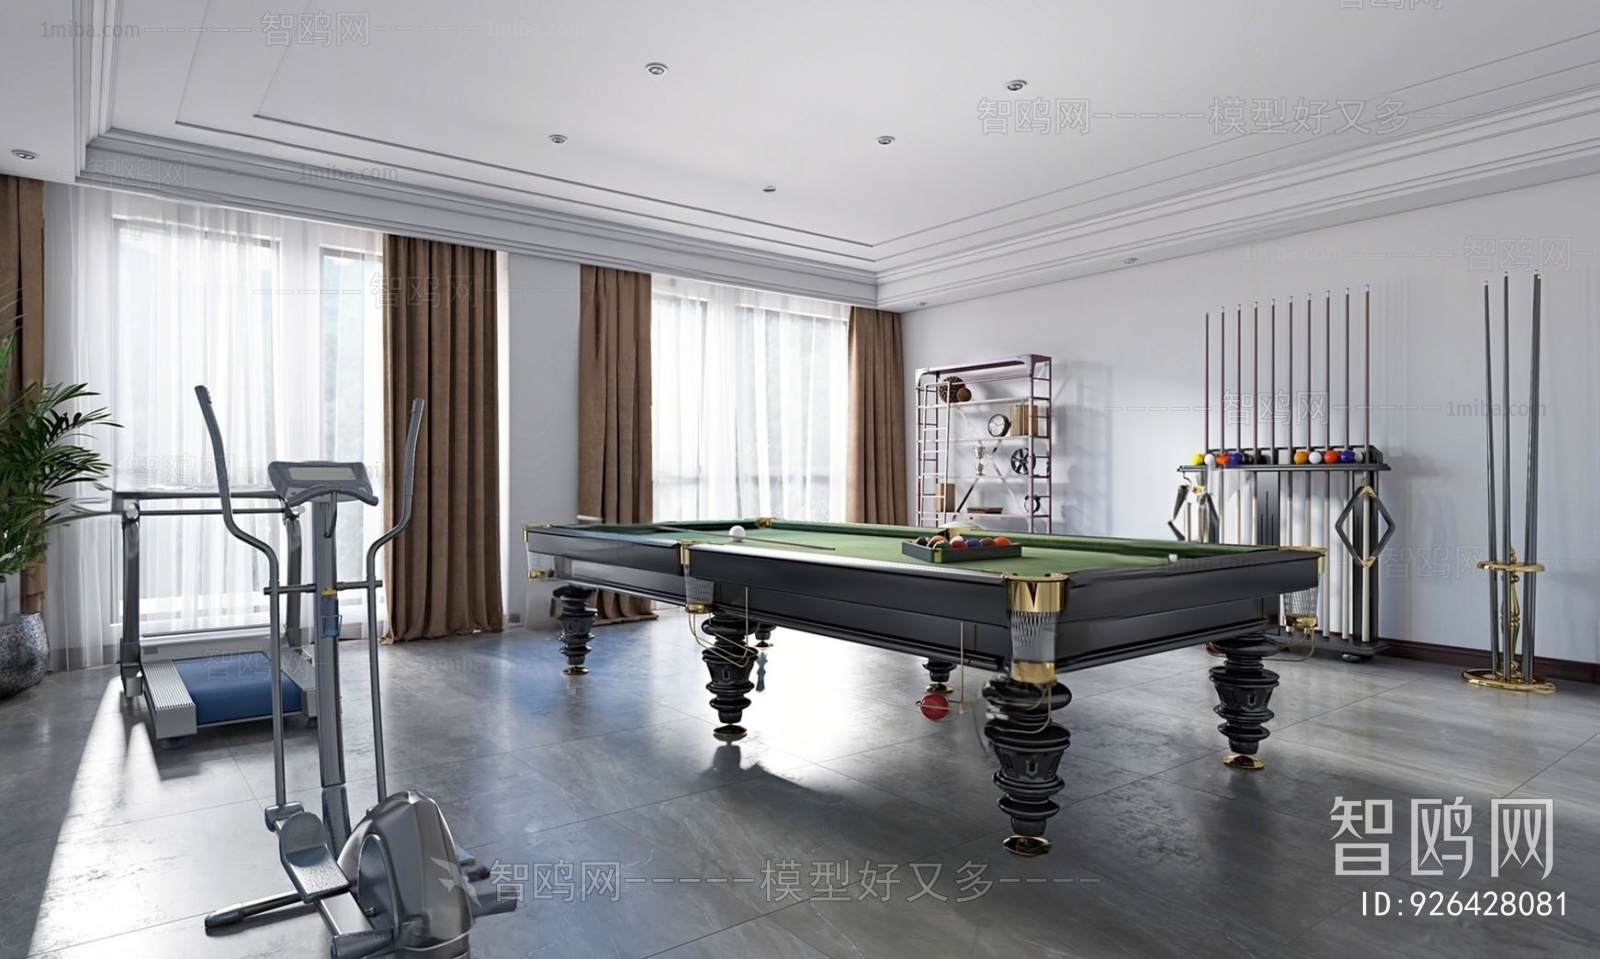 Modern Billiards Room